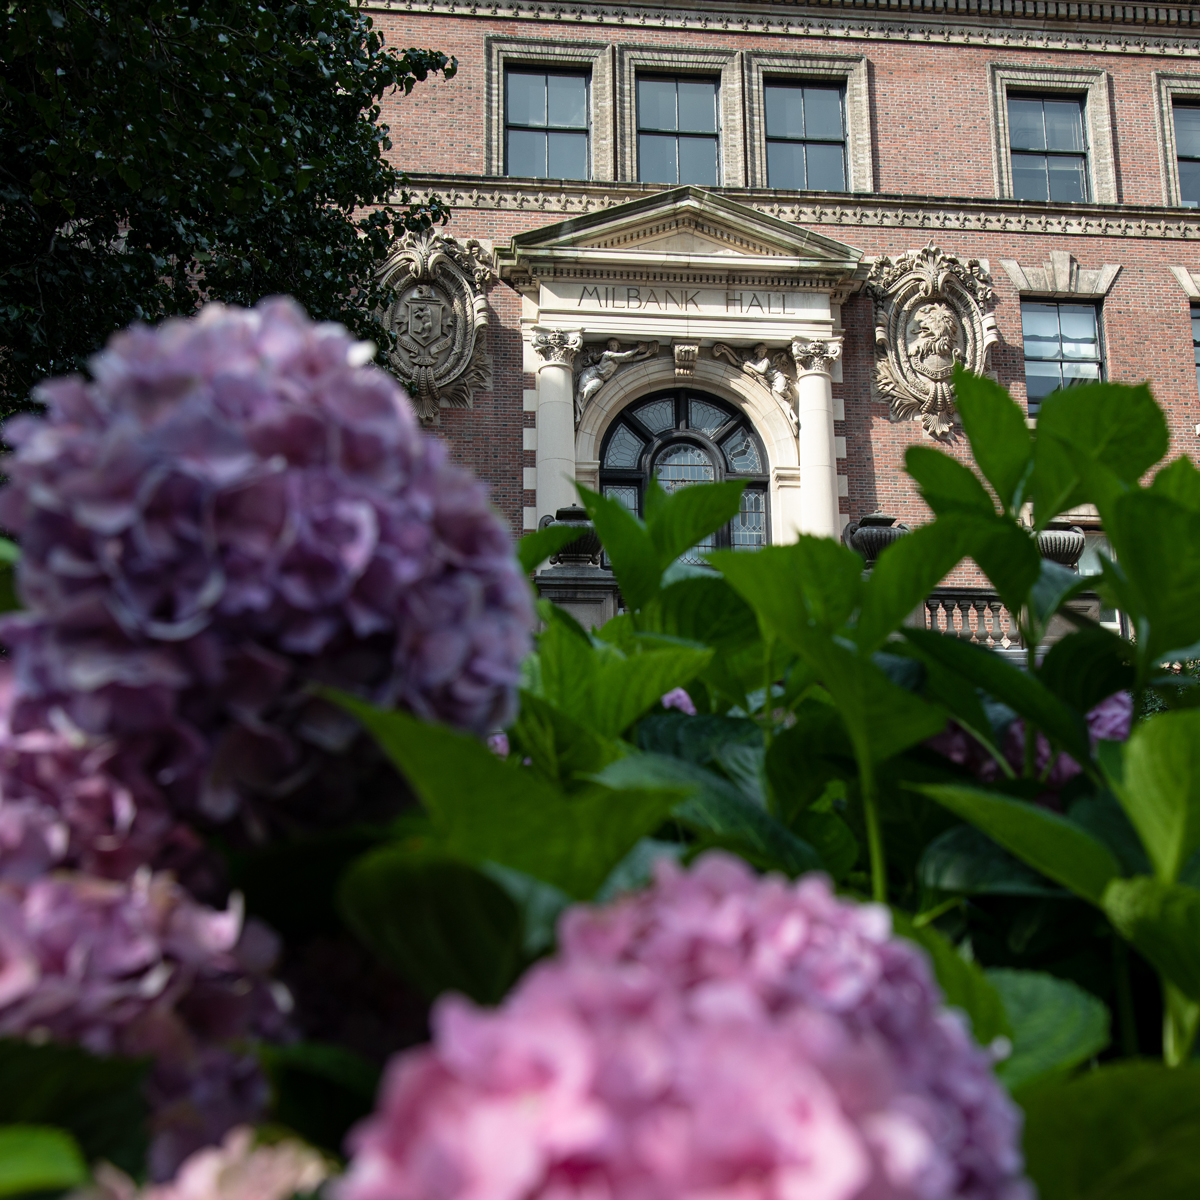 Hydrangeas bloom in front of Milbank Hall